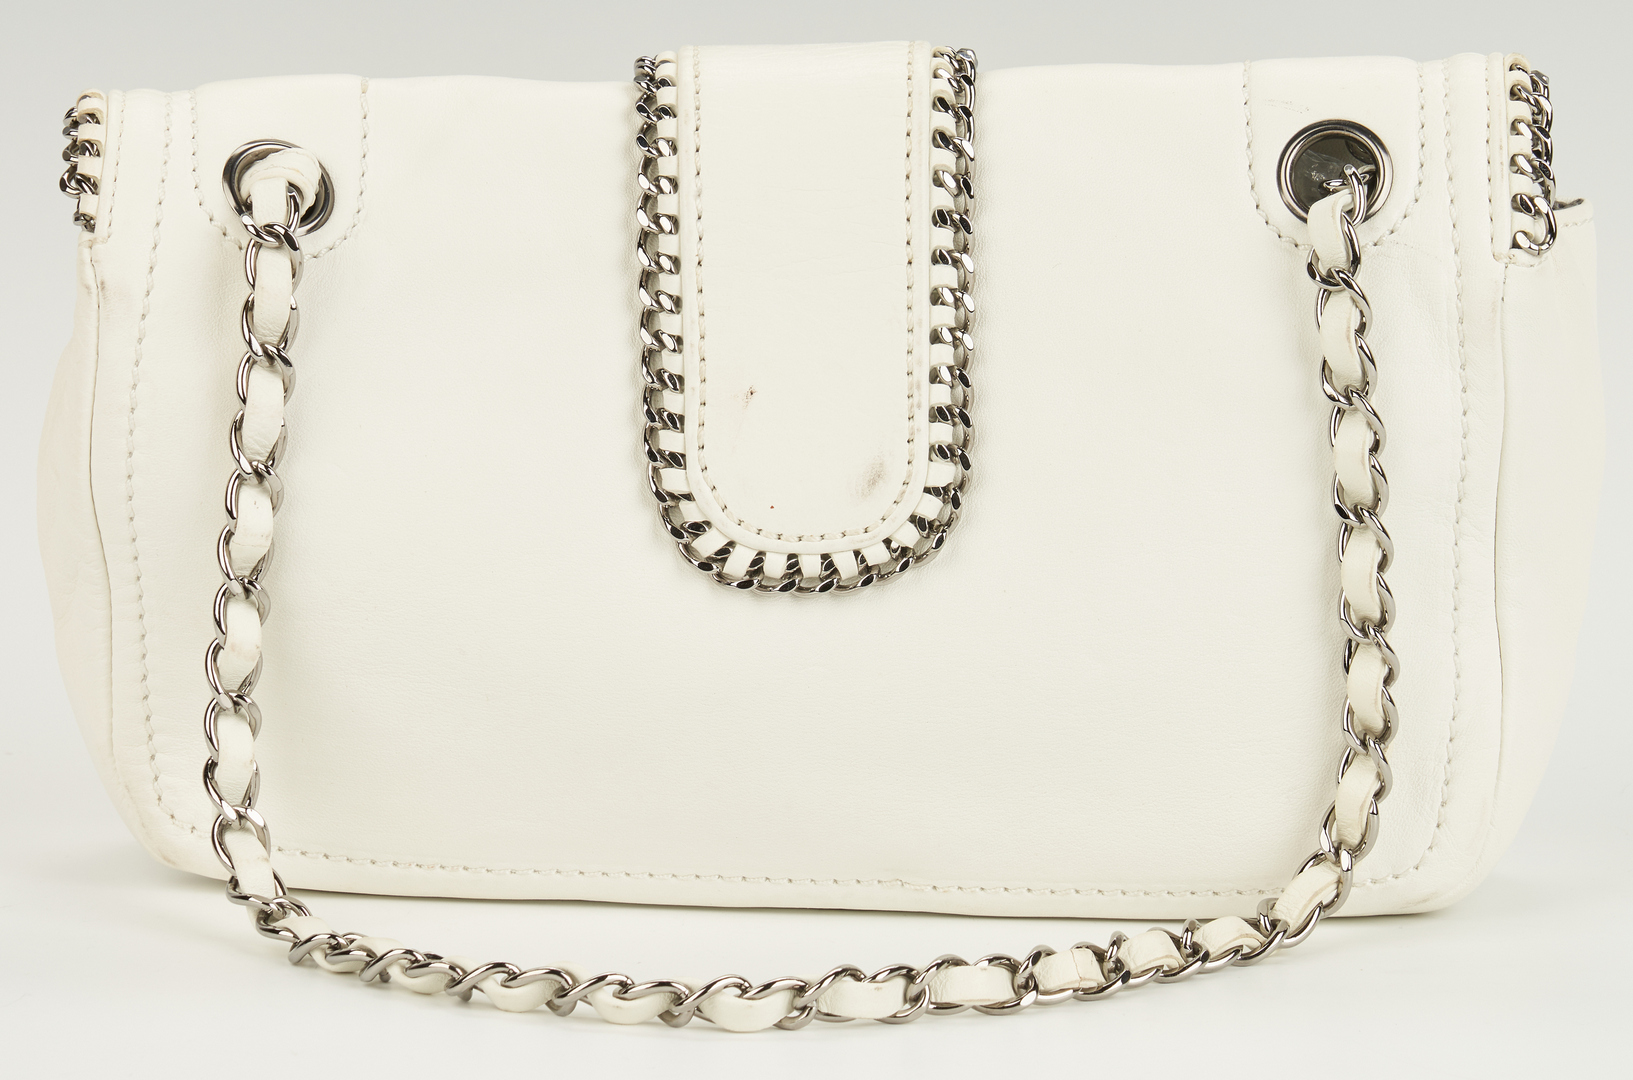 Lot 709: Chanel Madison Single Flap White Bag, Medium